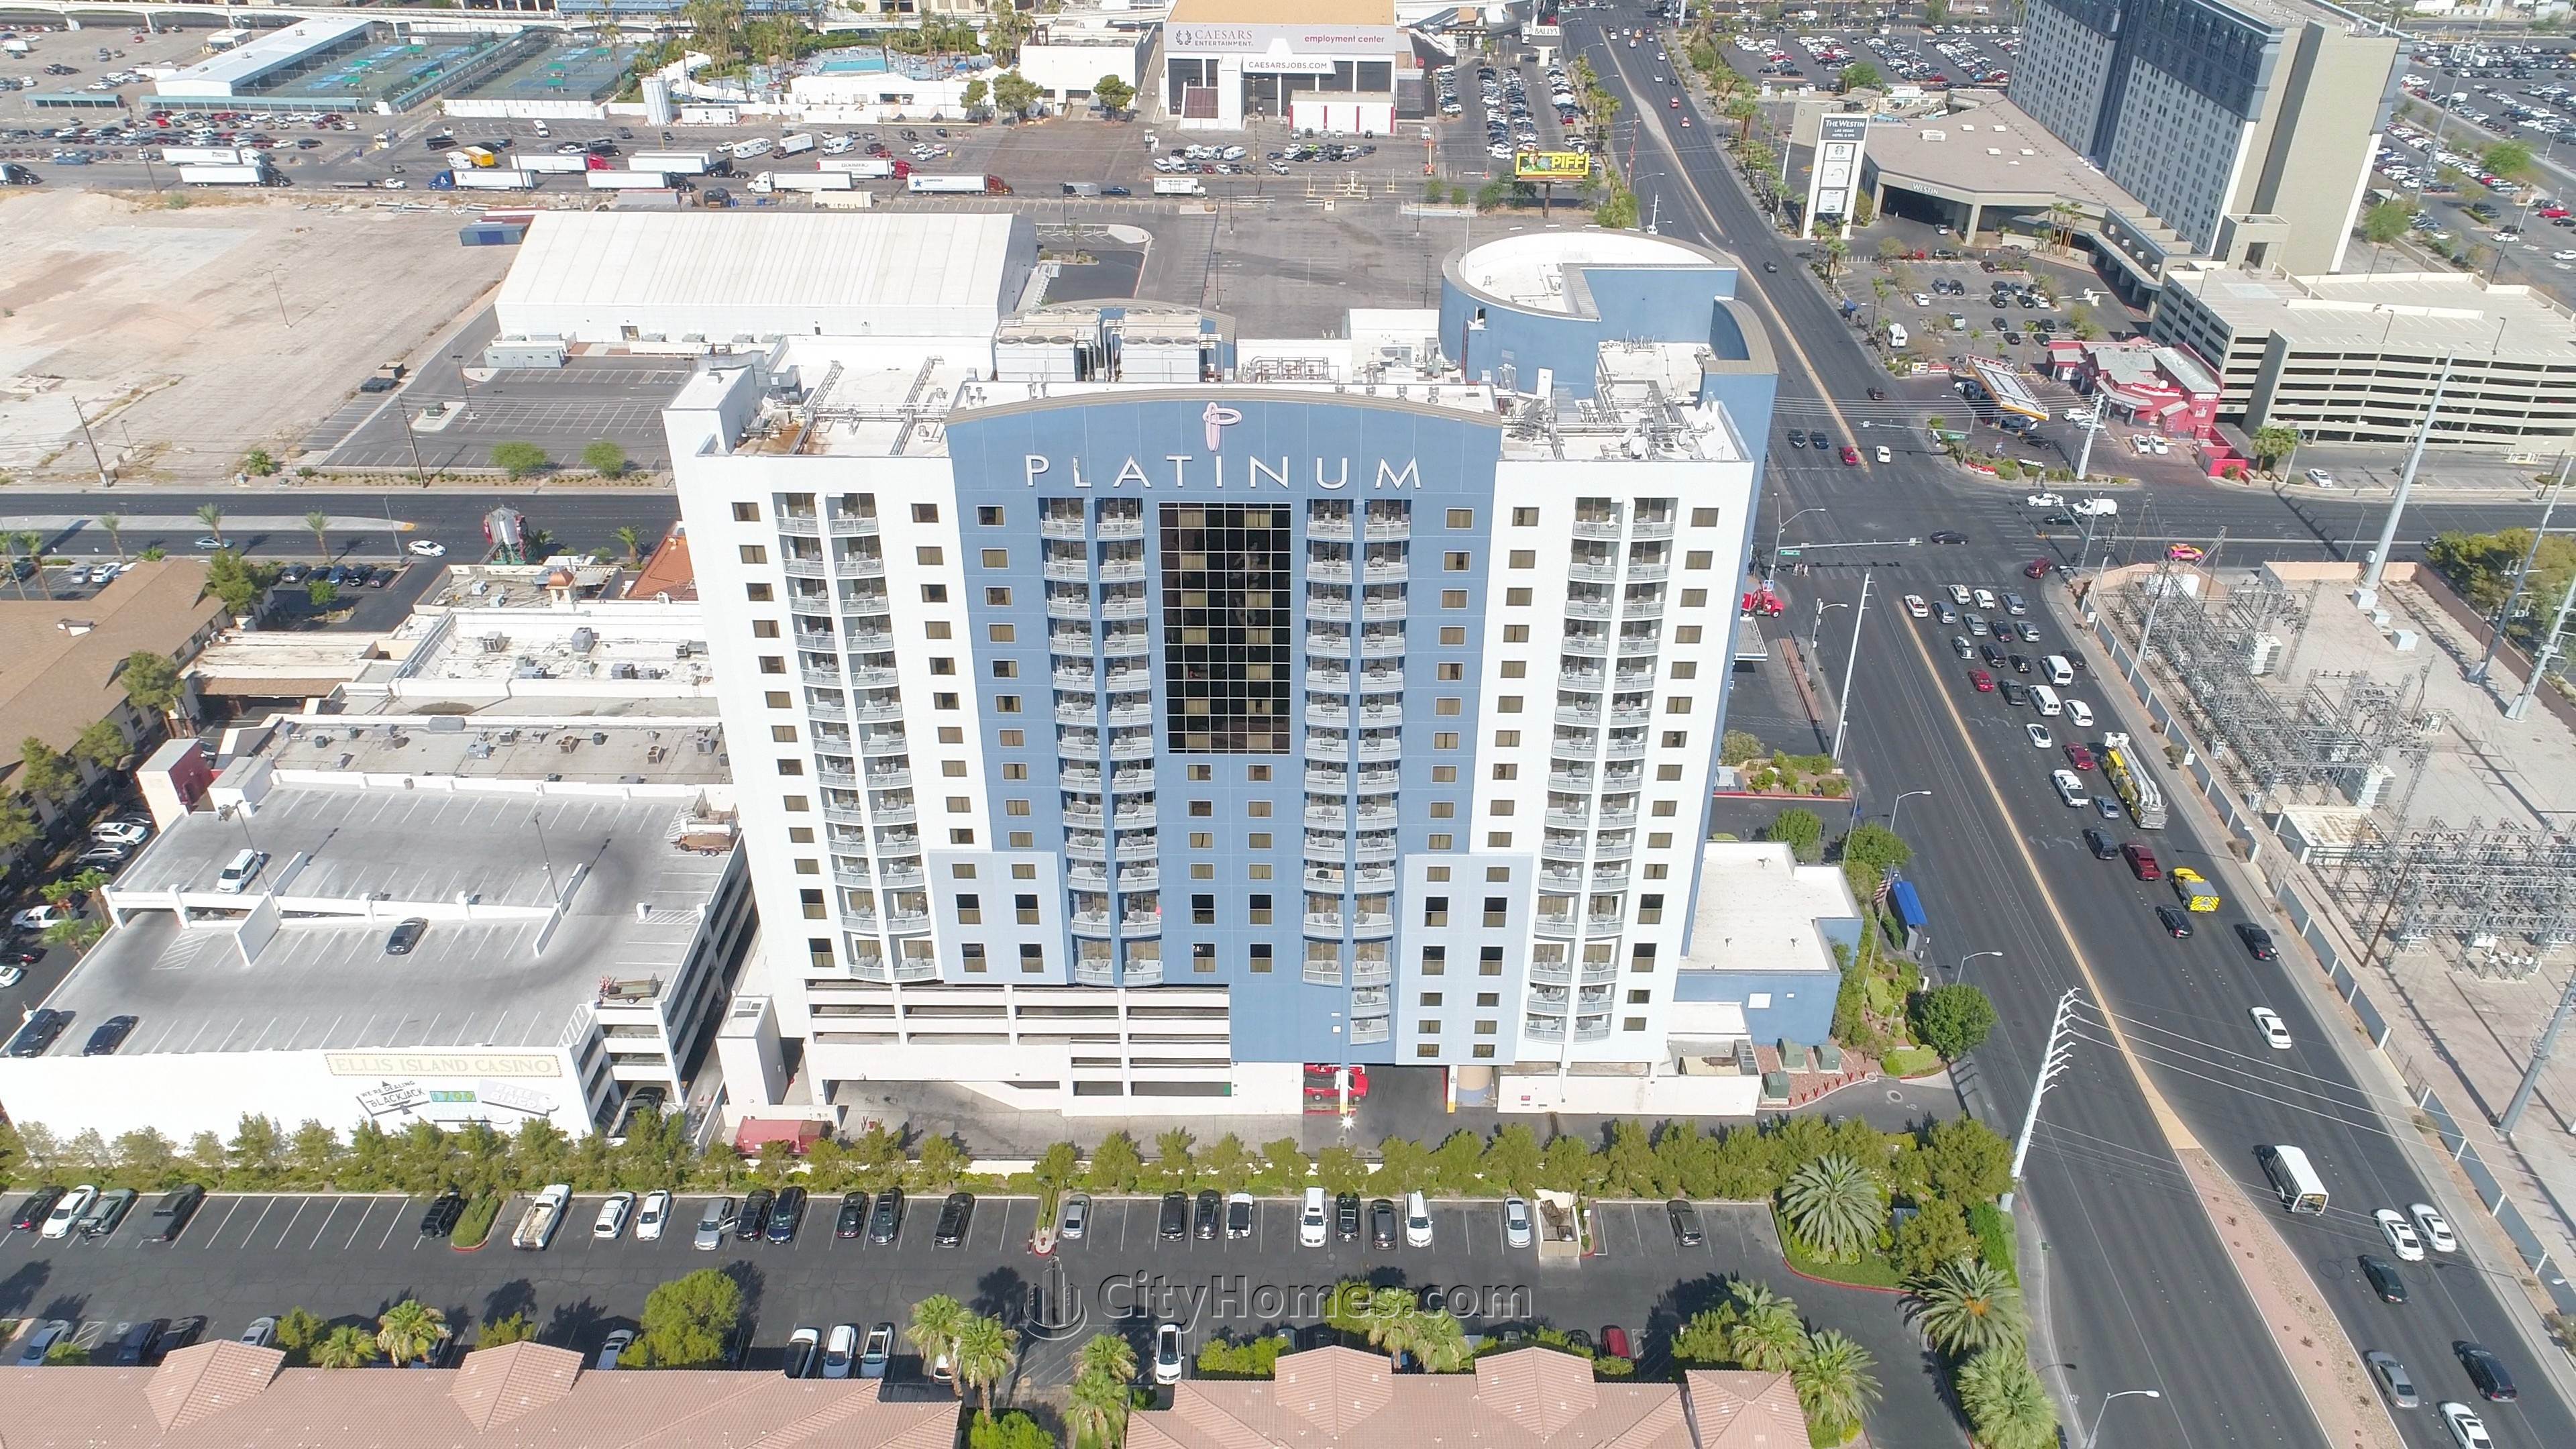 Platinum Resort edificio en 211 E Flamingo Road, Paradise, Las Vegas, NV 89169